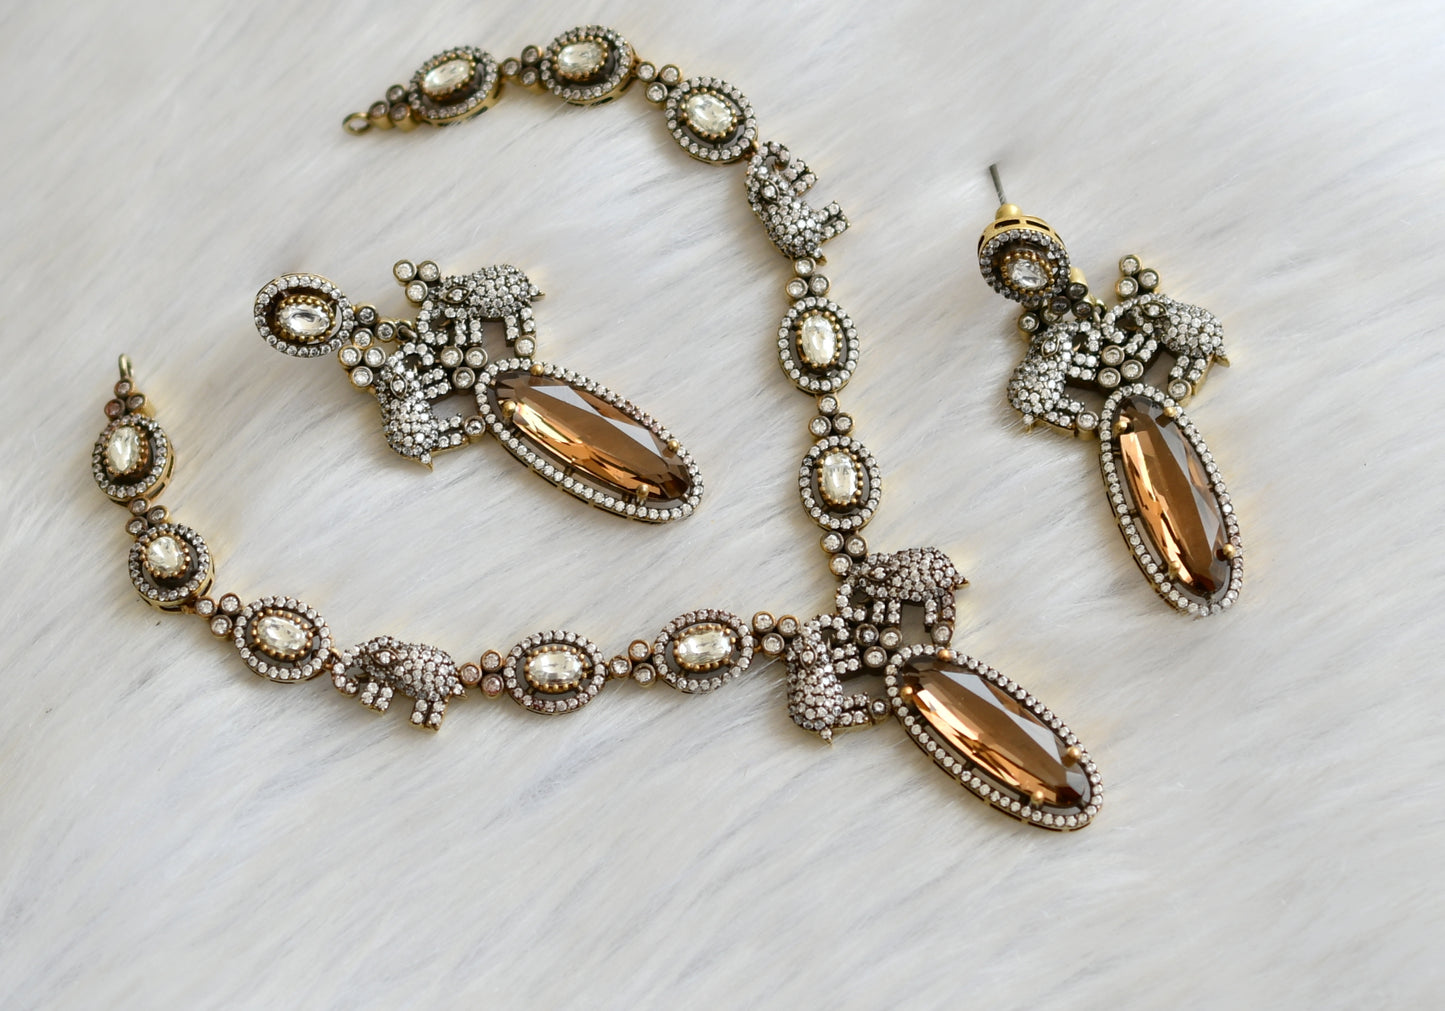 Antique cz topaz yellow victorian Elephant necklace set dj-41507